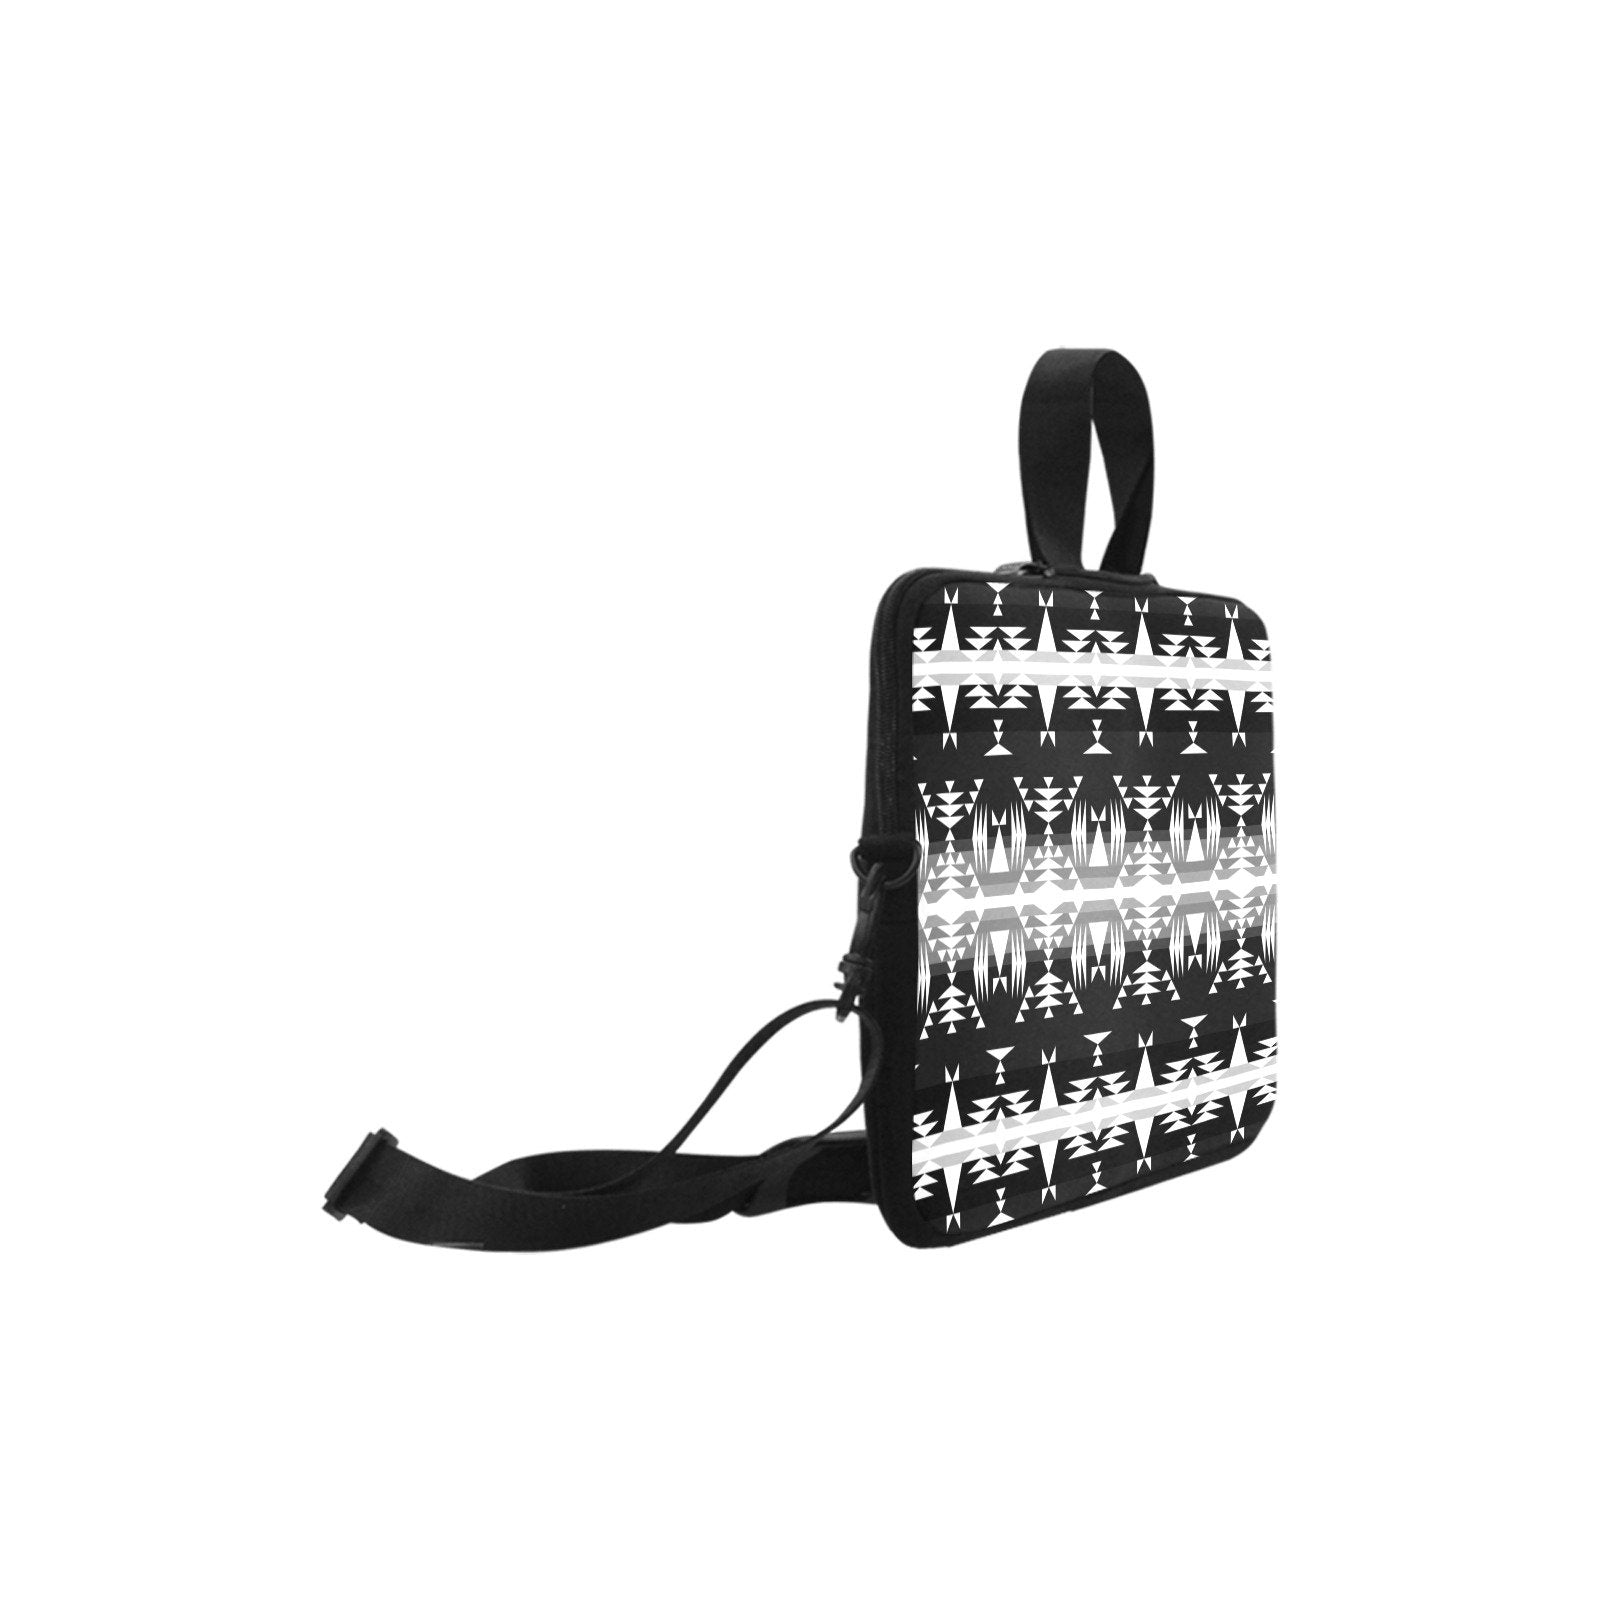 Between the Mountains Black and White Laptop Handbags 11" bag e-joyer 